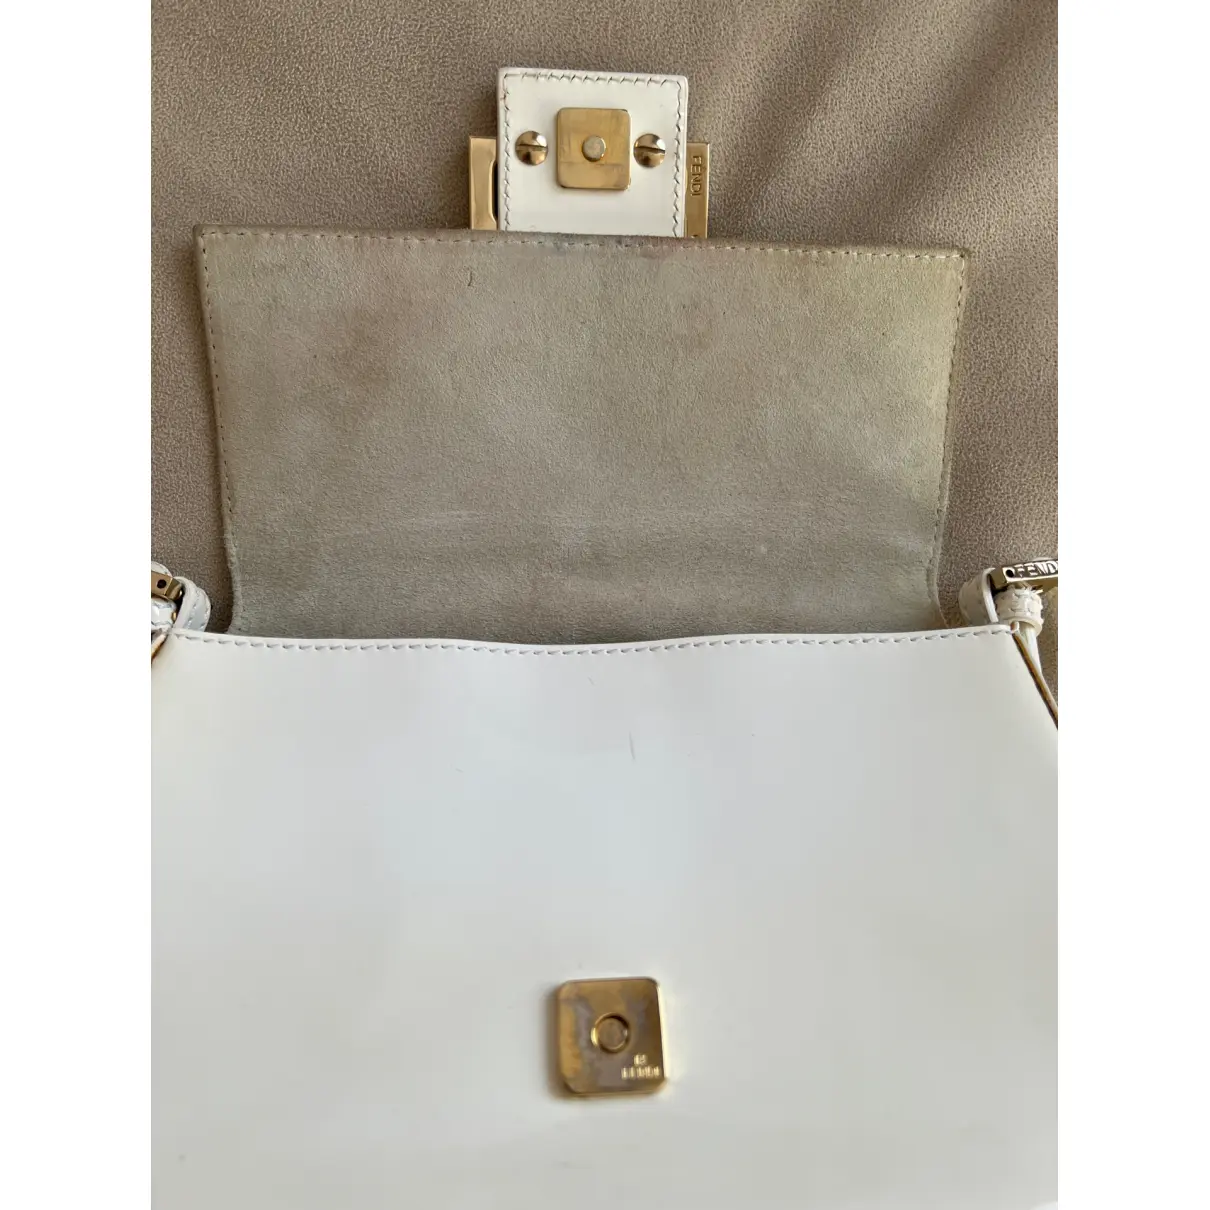 Baguette patent leather handbag Fendi